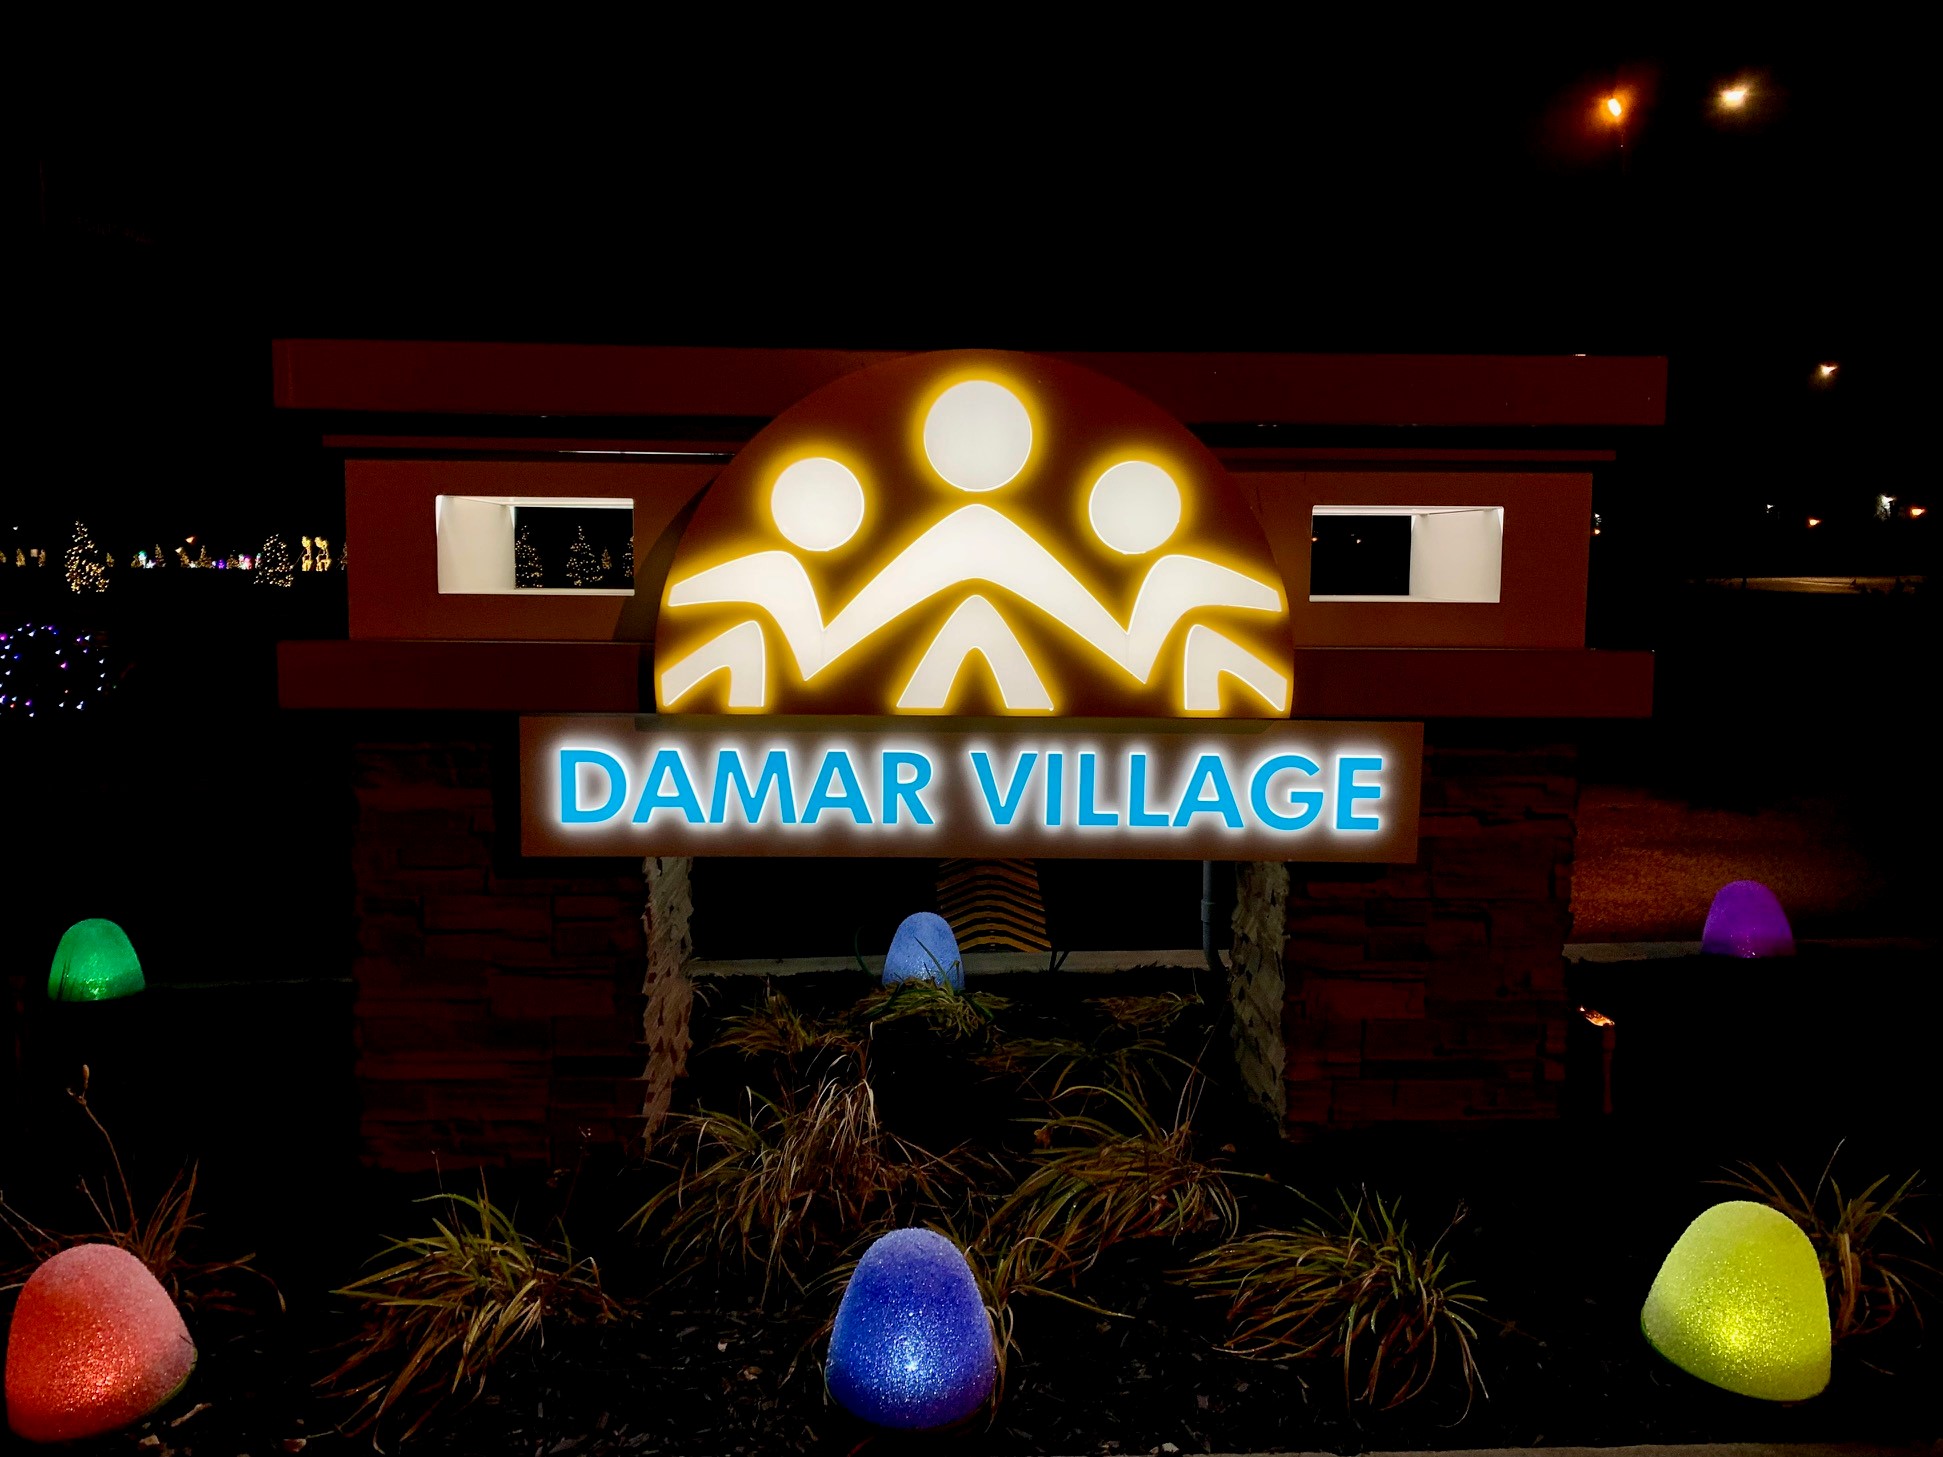 Damar Holiday Village sign